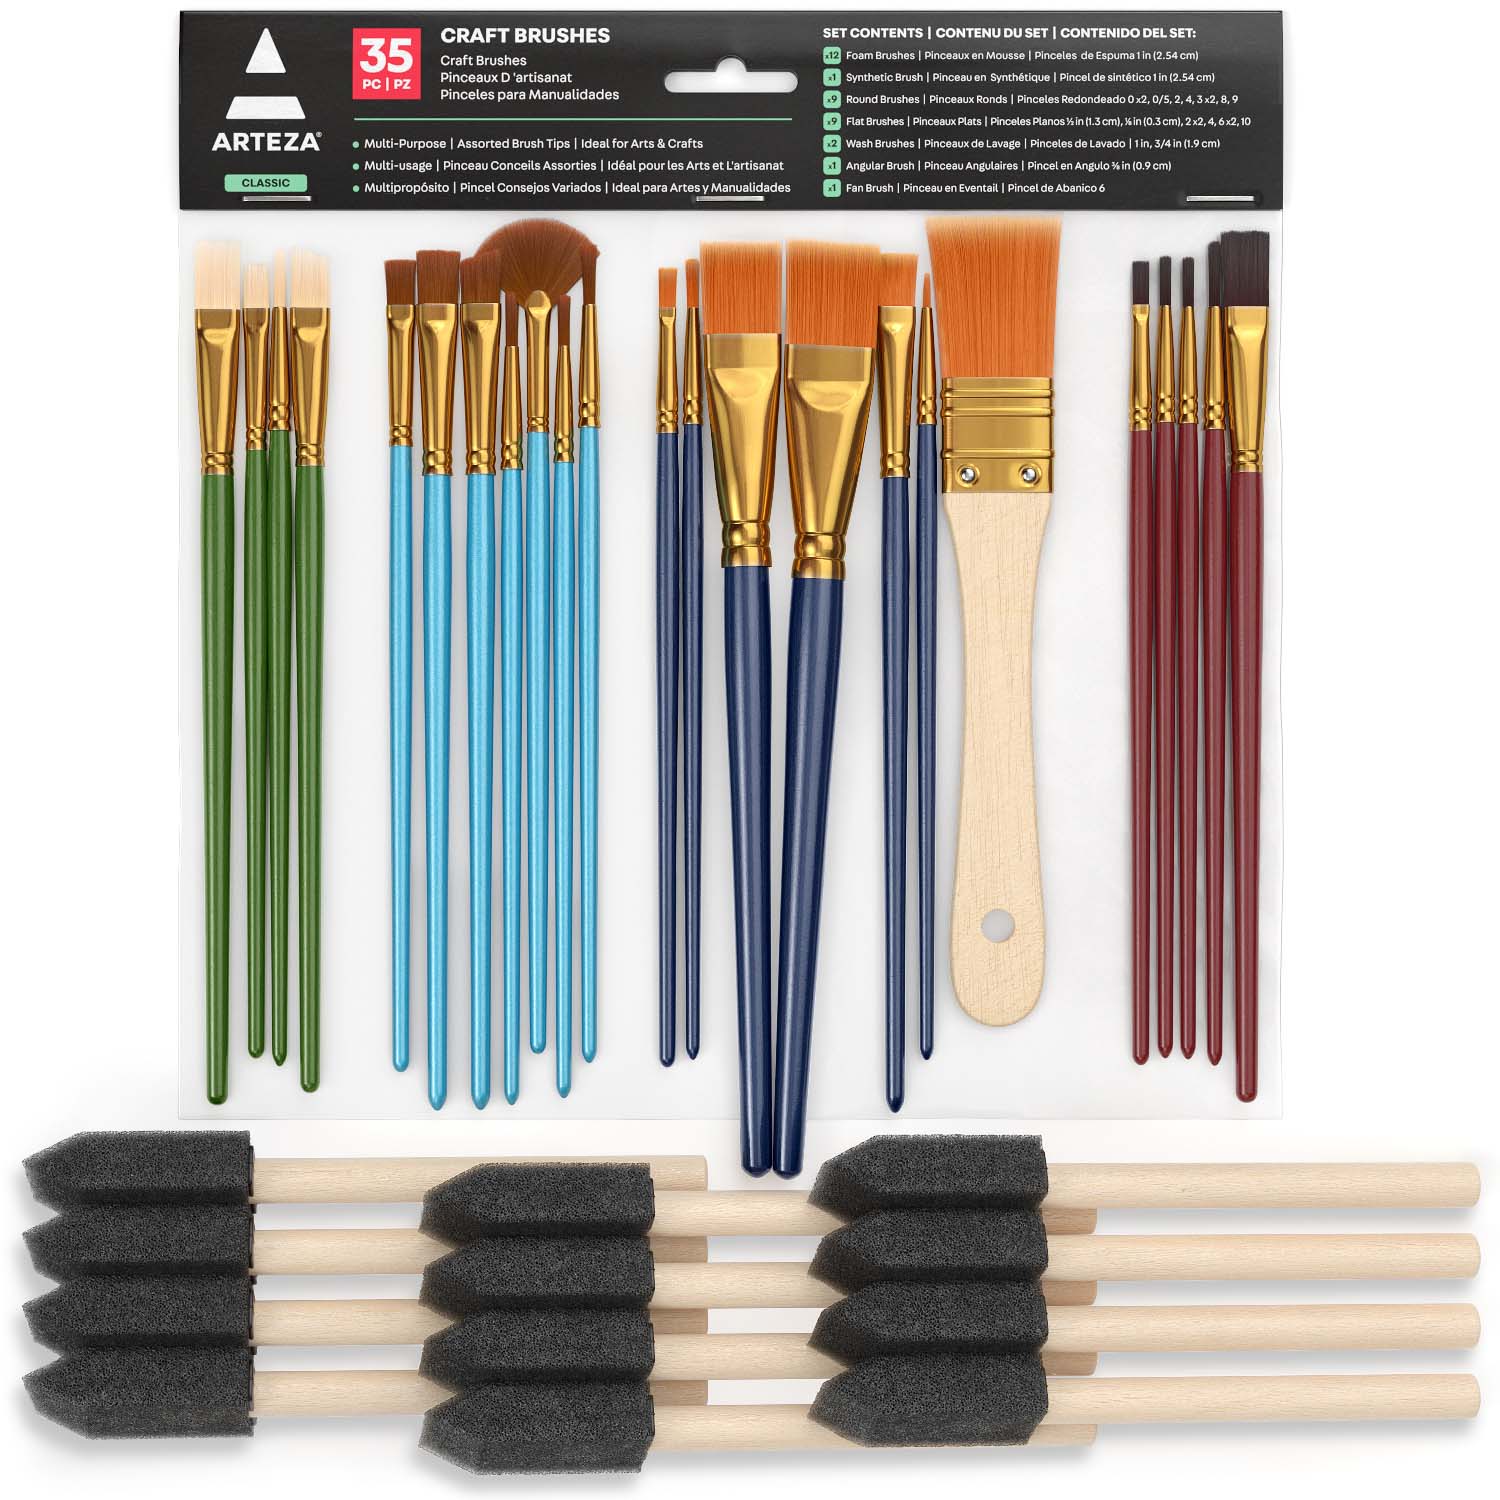 Free craft brushes